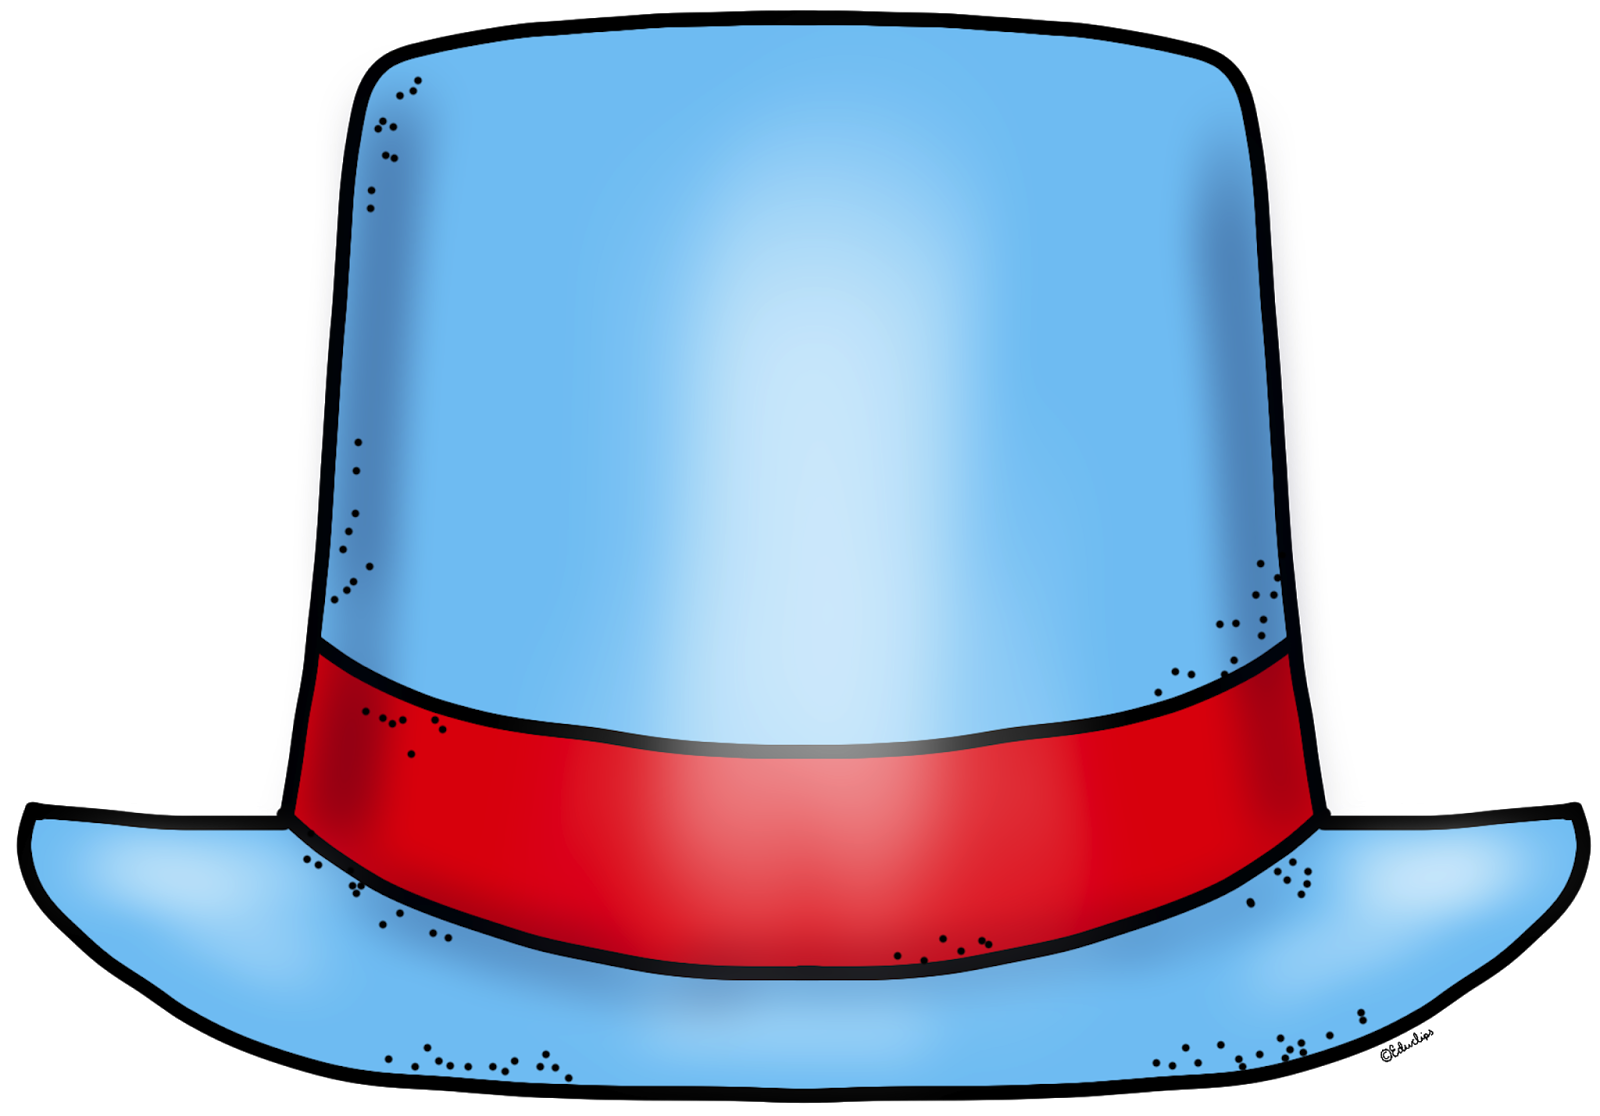 Hats Clipart